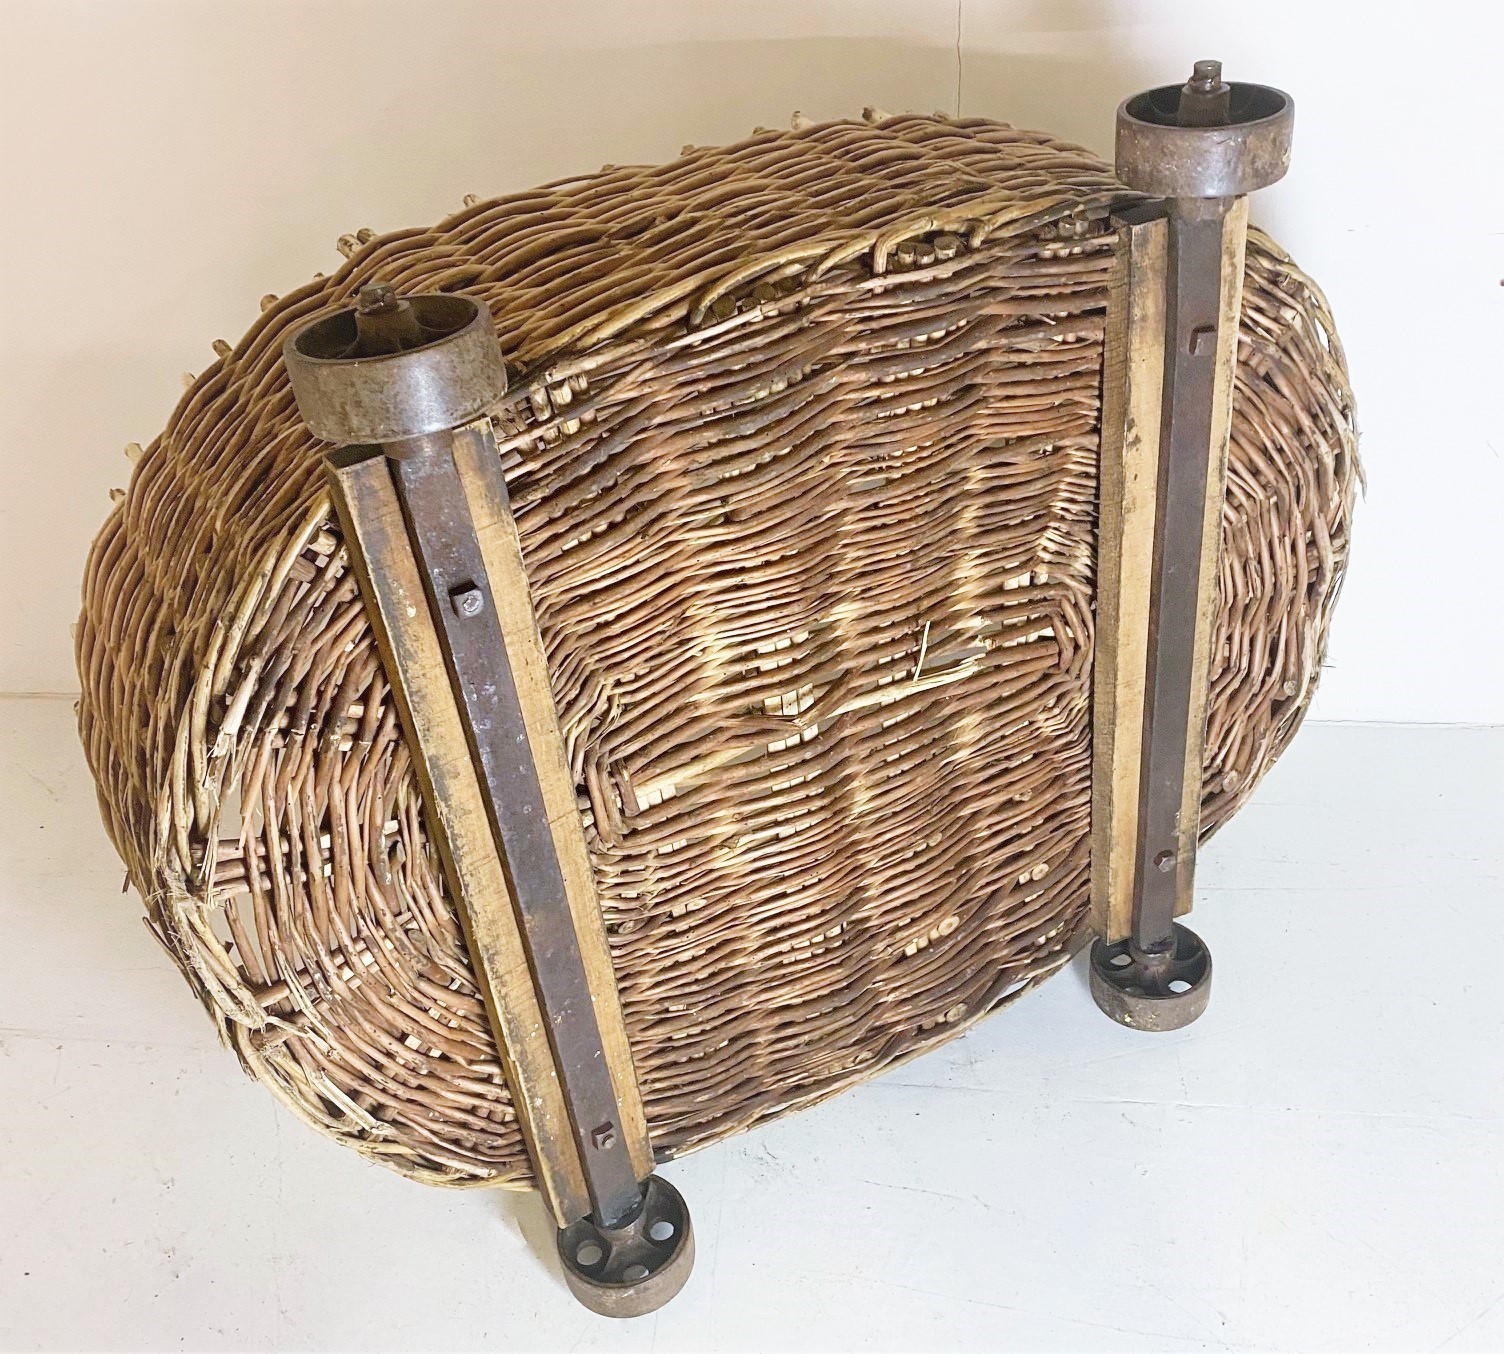 Large Wicker Dog Bed Log Basket - Cast Iron Wheels - The Hoarde